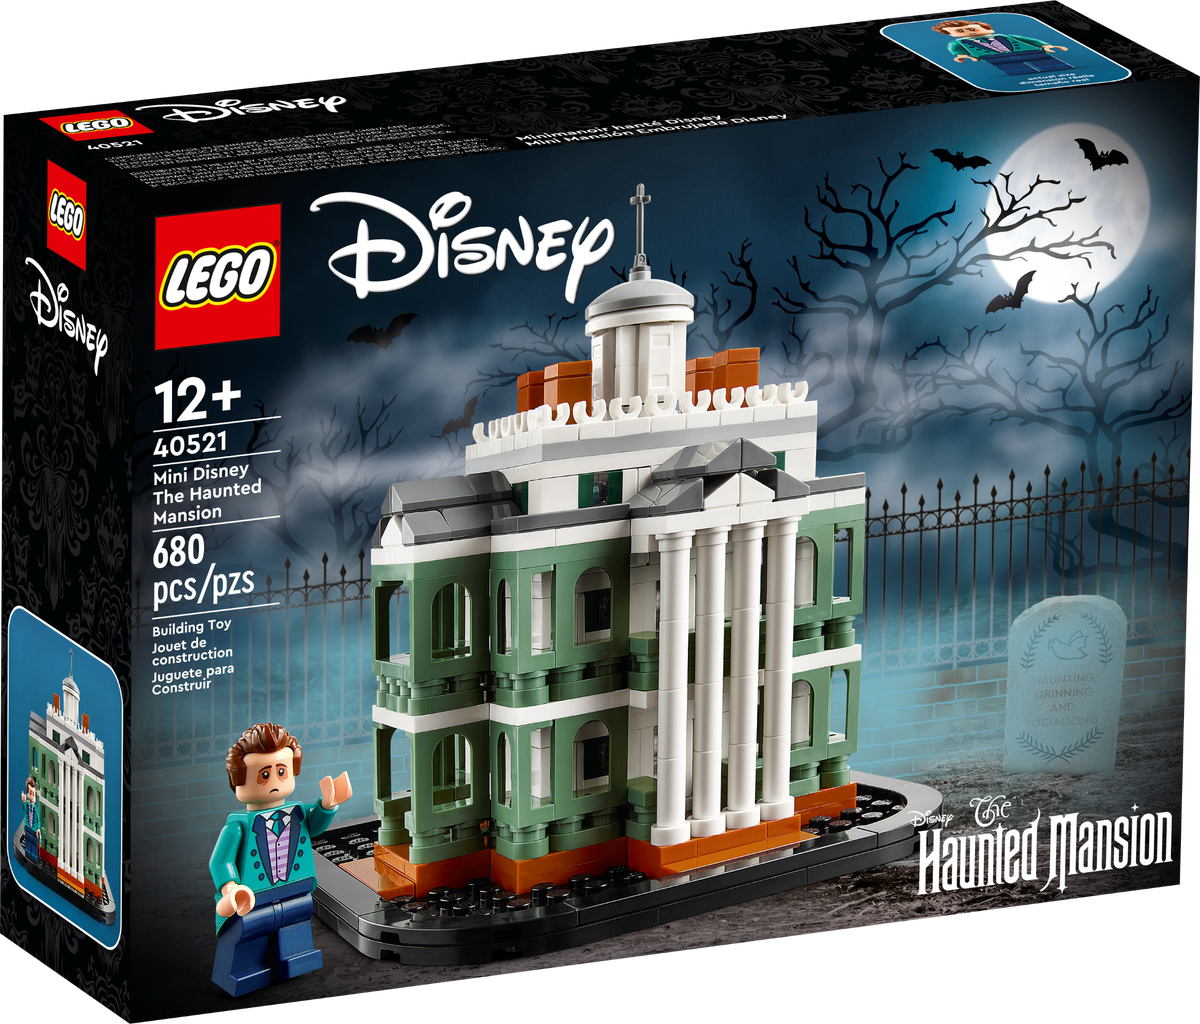 40521: Mini Disney The Haunted Mansion